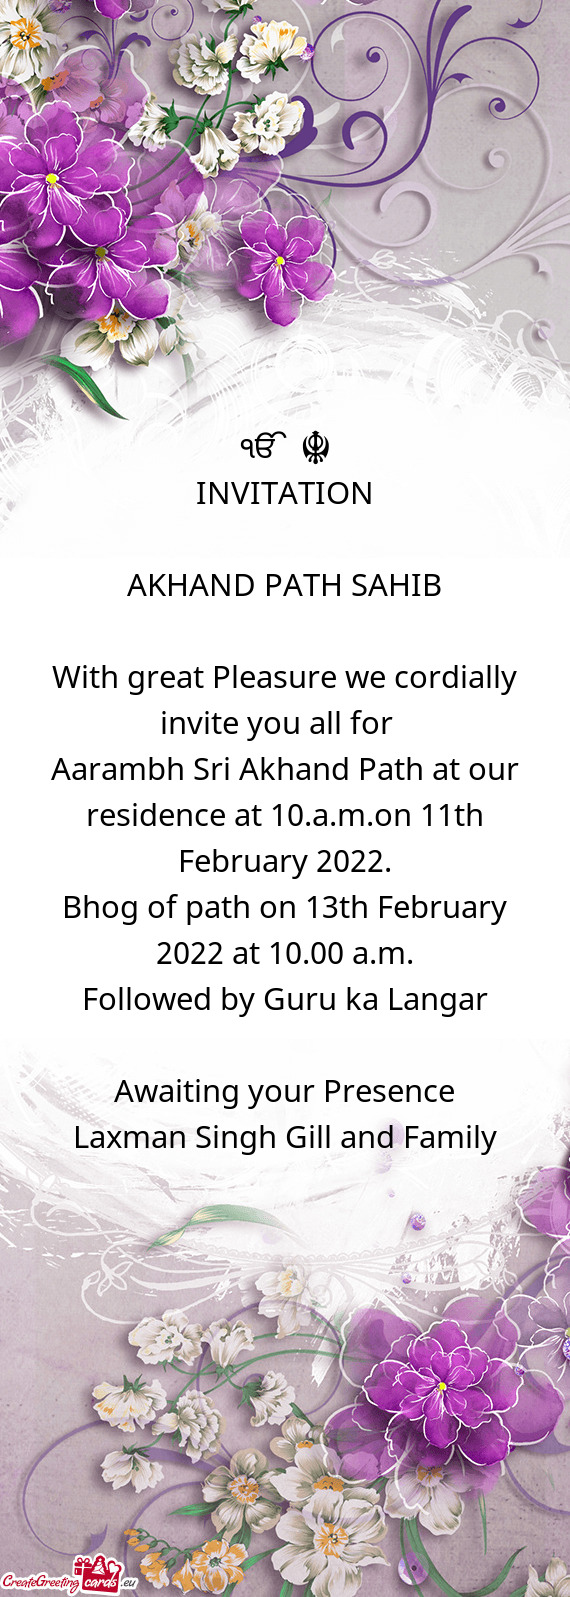 Bhog of path on 13th February 2022 at 10.00 a.m